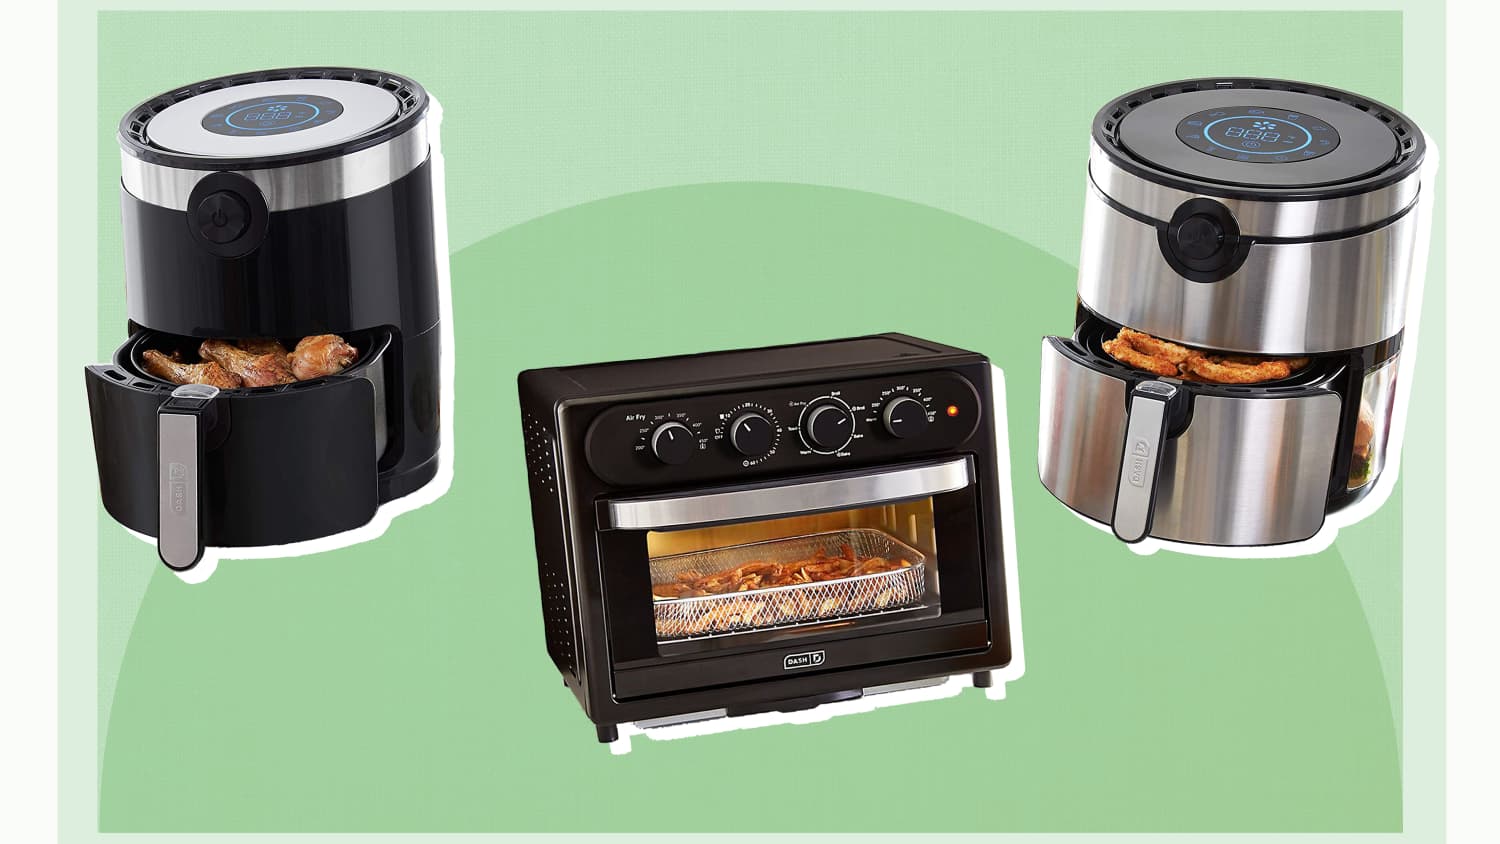 Dash Air Fryers & Air Fryer Ovens